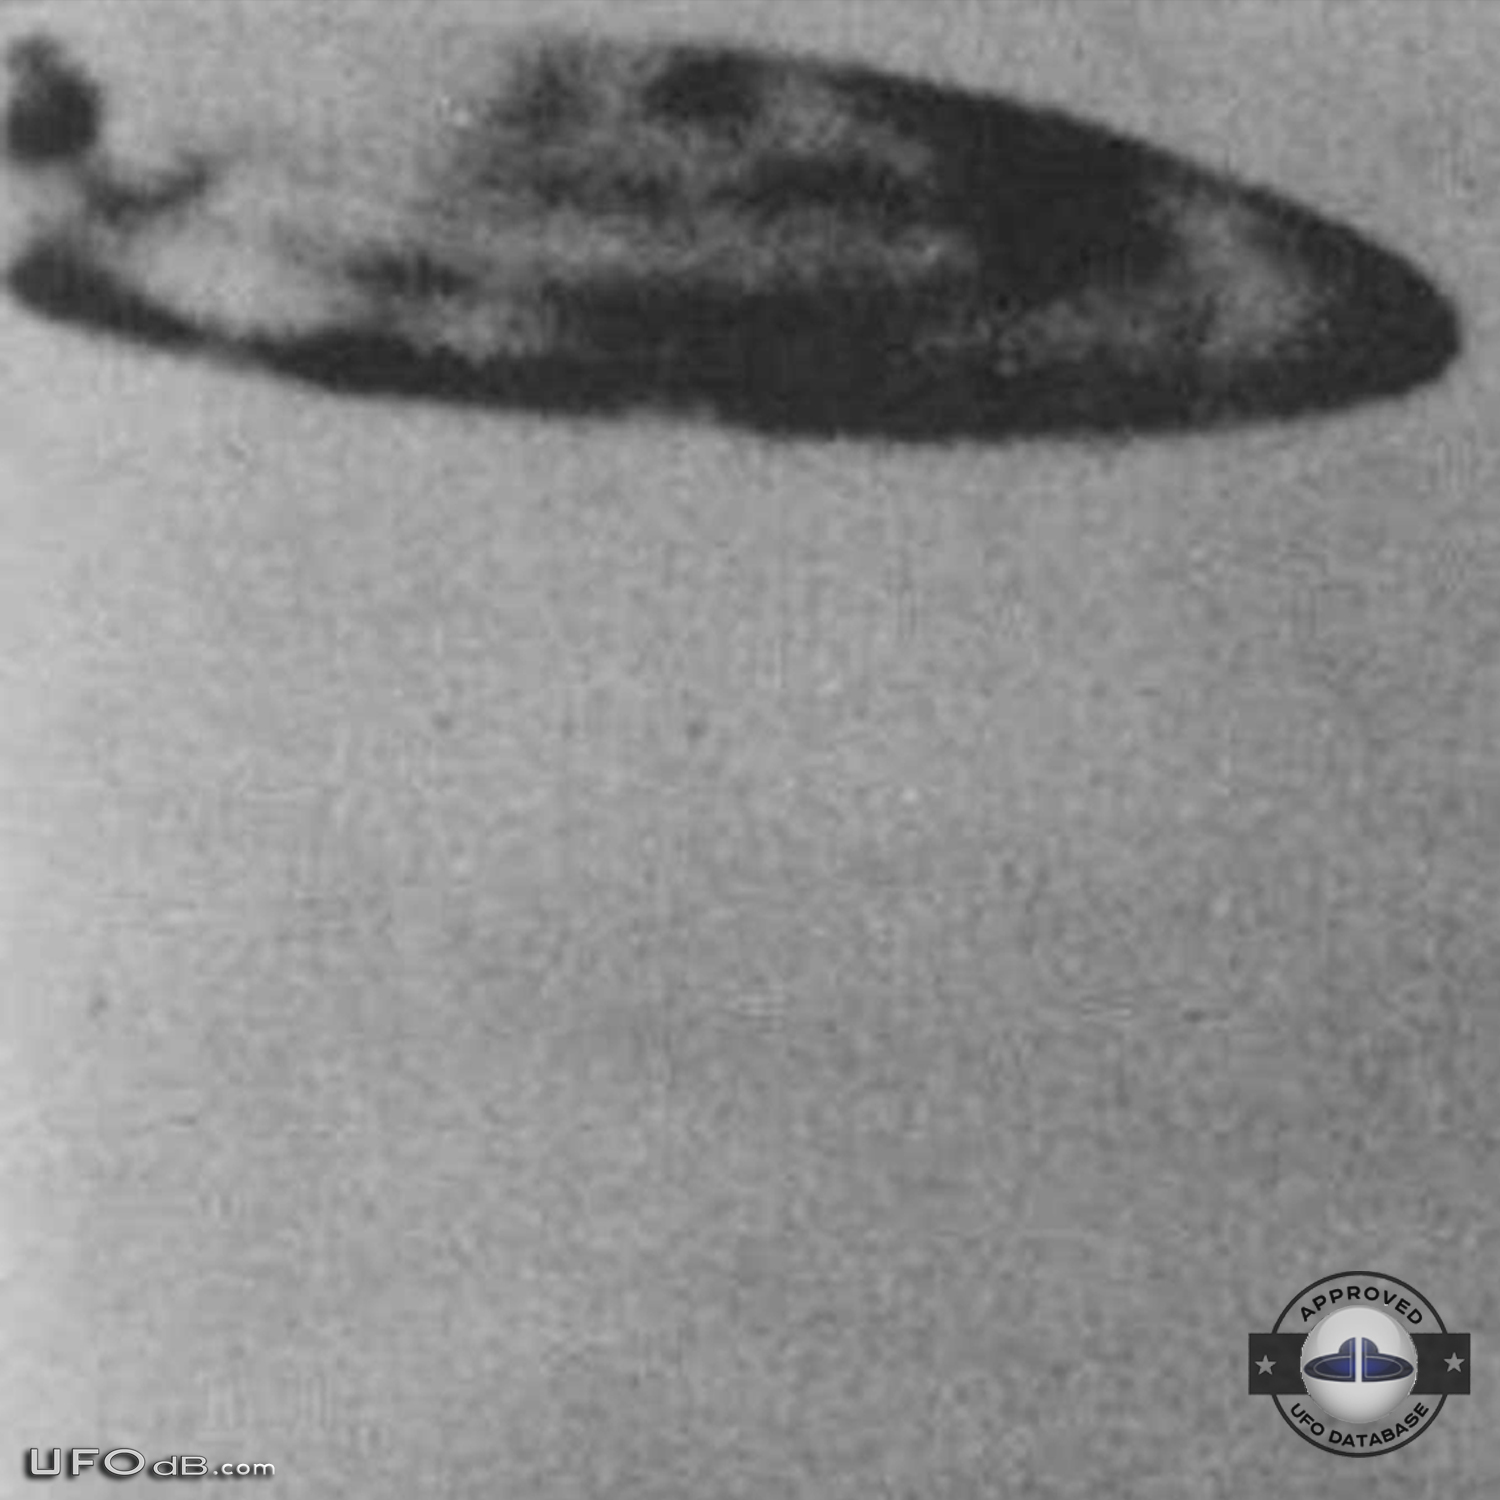 1950 Saucer UFO San Bernardino California USA caught on picture UFO Picture #433-4